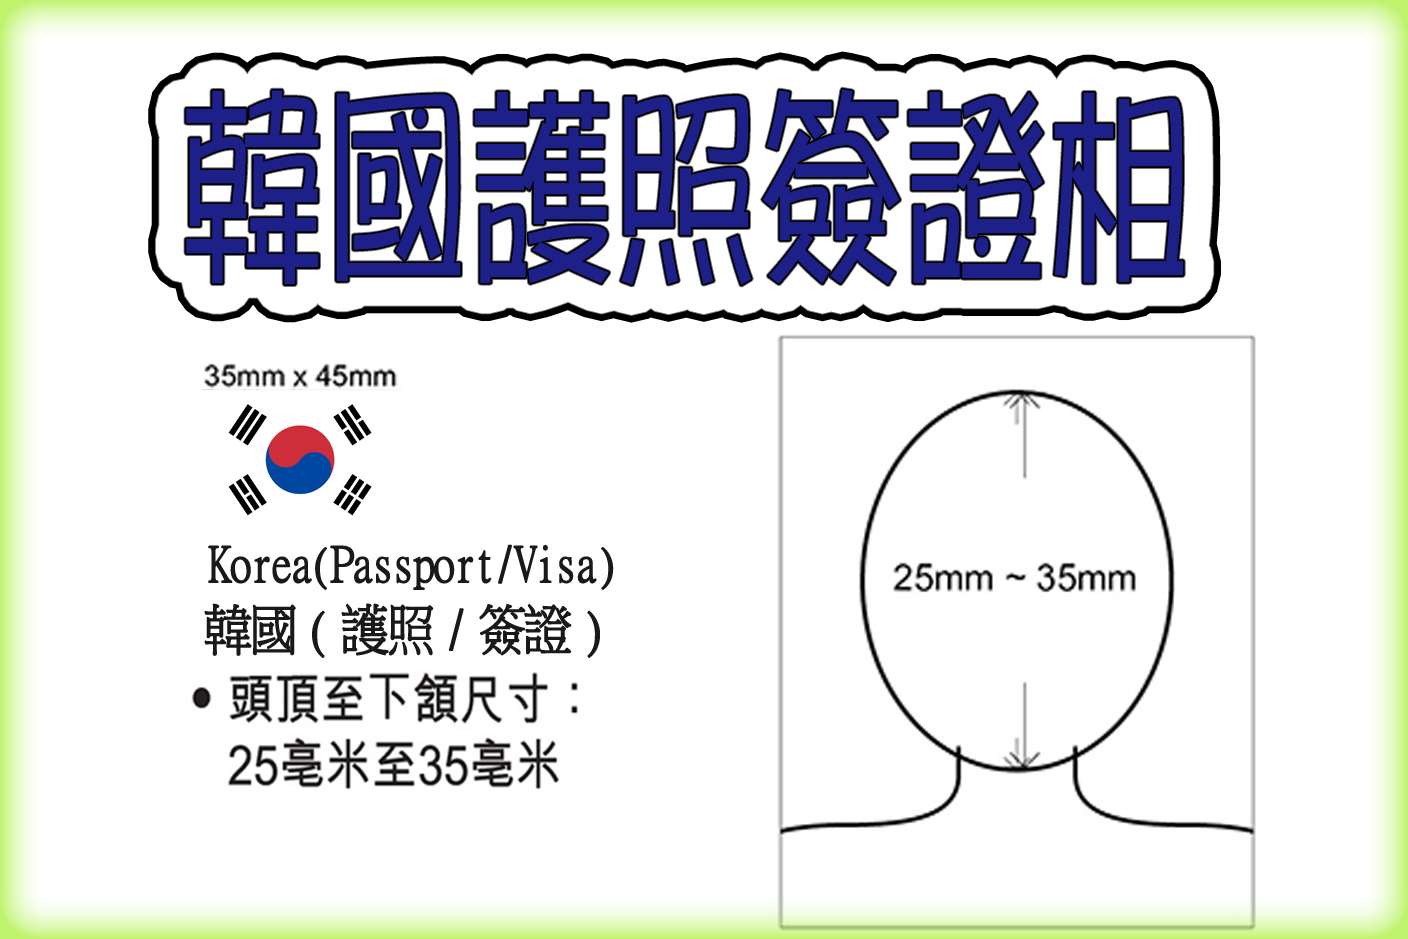 South Korea Passport/Visa